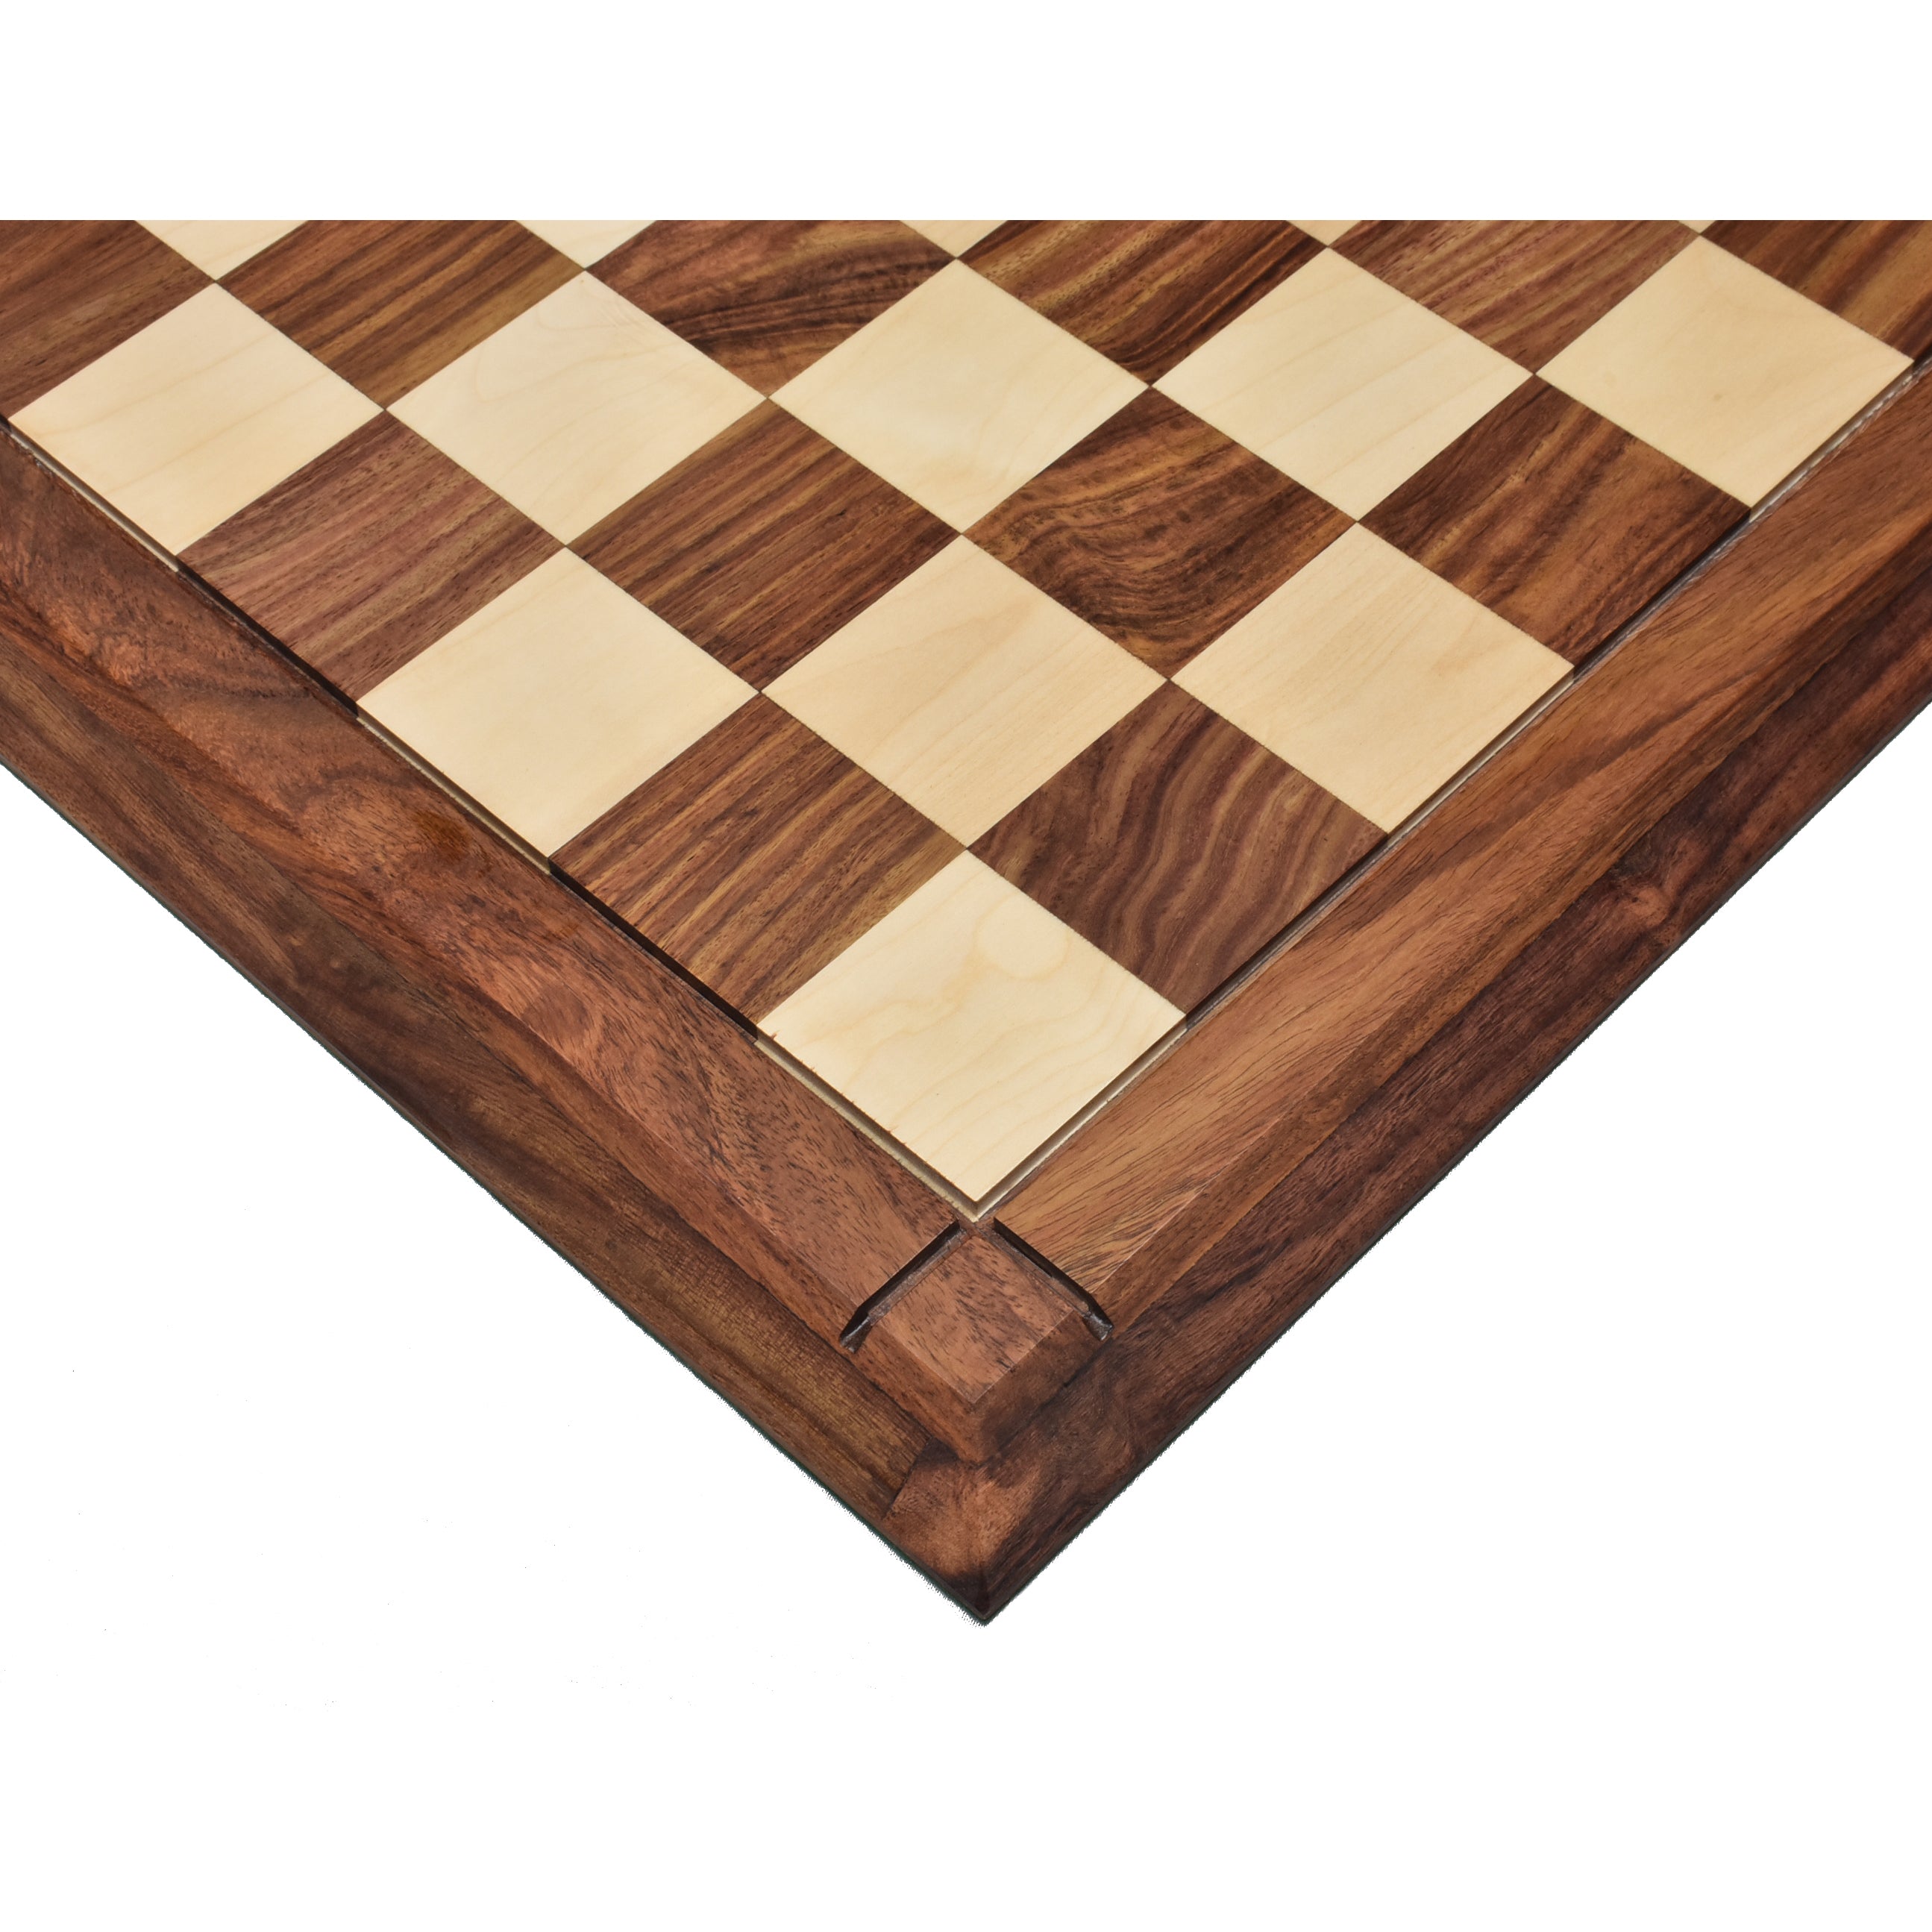 4" Leningrad Staunton Ebonised Boxwood Chess Pieces with 21" Golden Rosewood & Maple Wood board and Golden Rosewood Storage Box